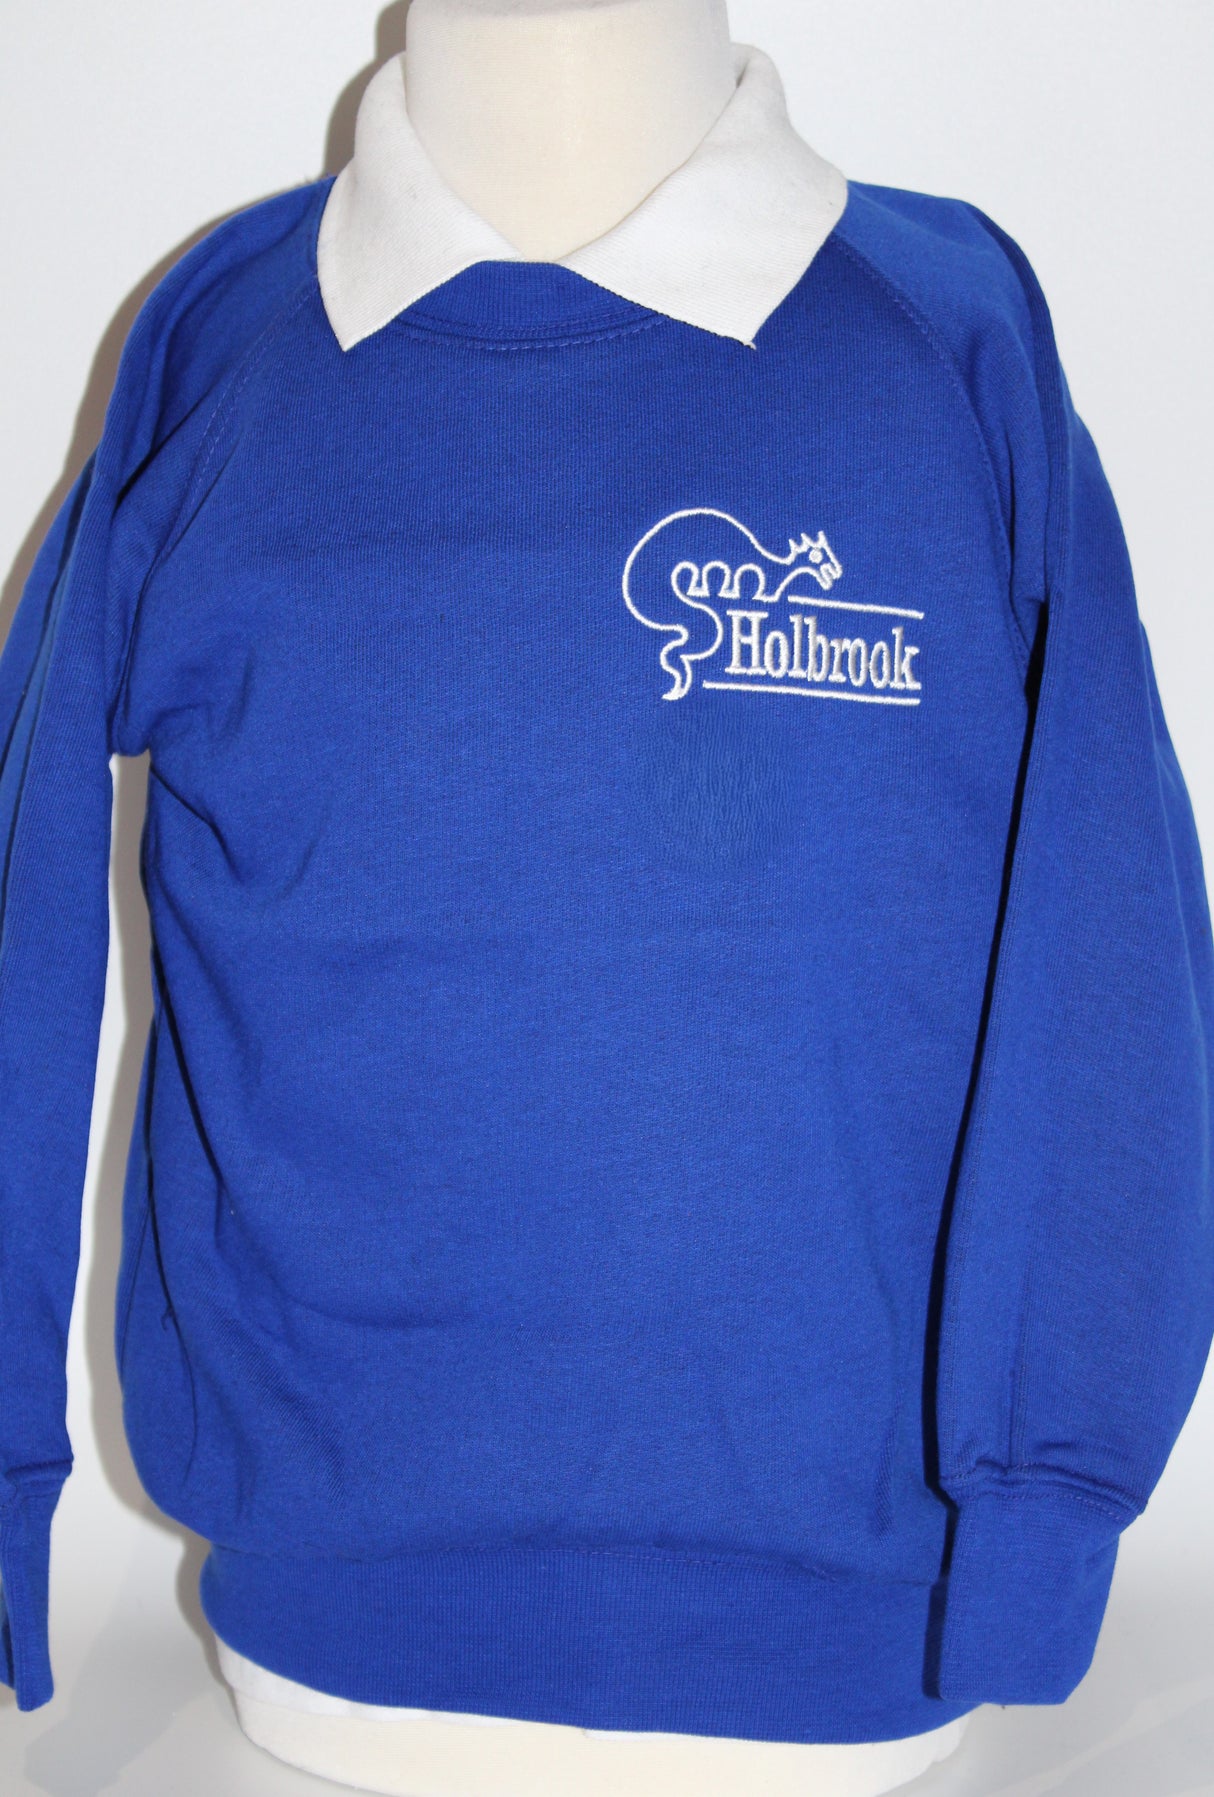 Holbrook School Crew Neck Sweatshirt with logo